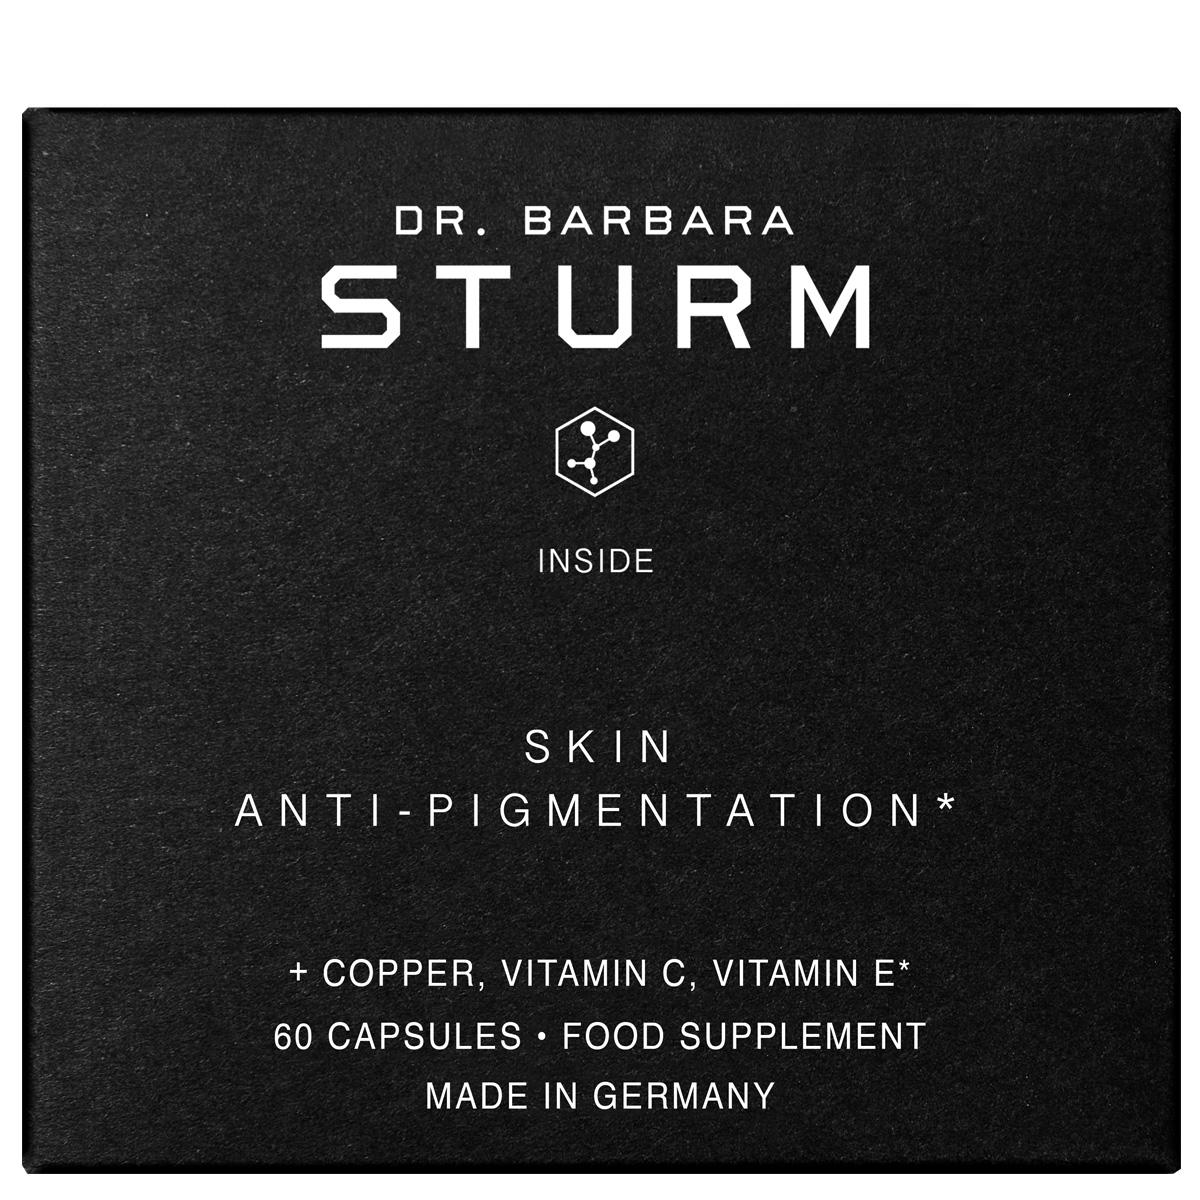 Dr. Barbara Sturm Skin Anti-Pigmentation* 60 Capsules Pro Packung 60 Stück - 3